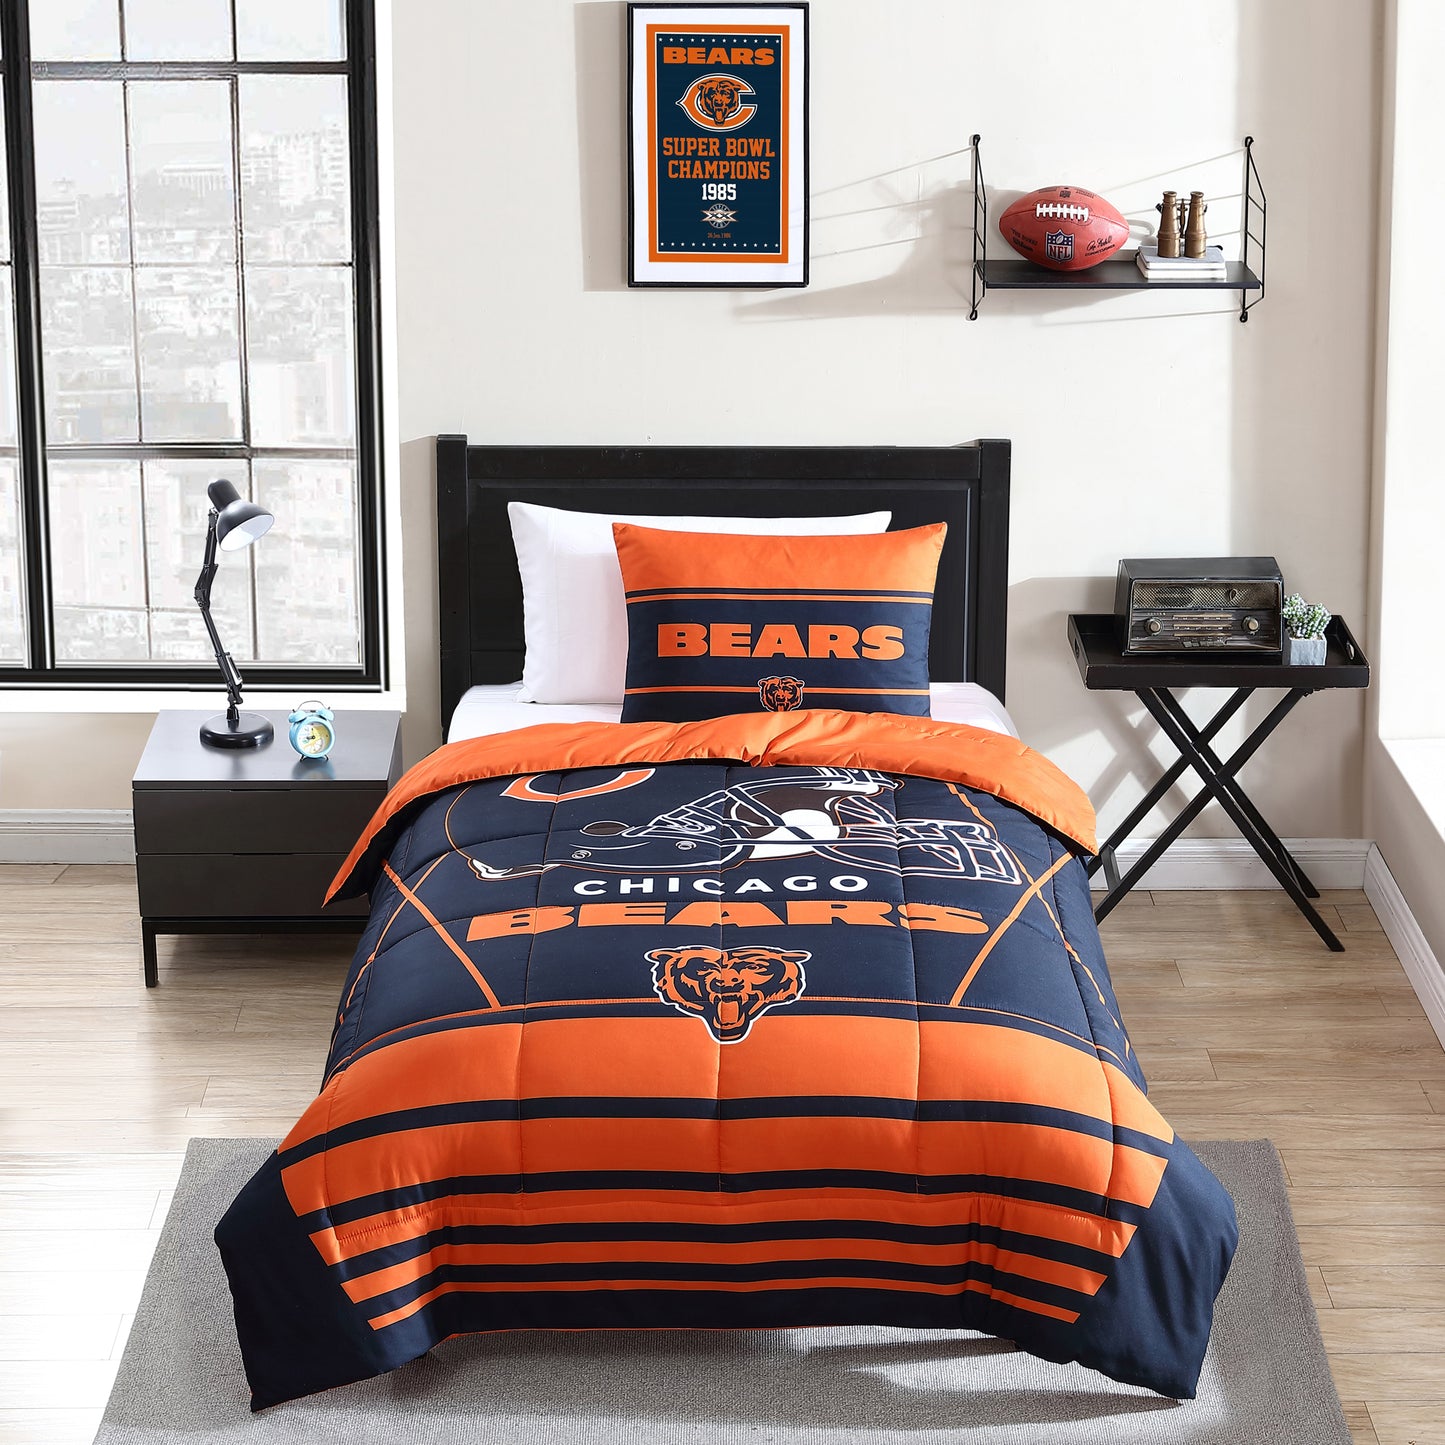 Chicago Bears twin size comforter set